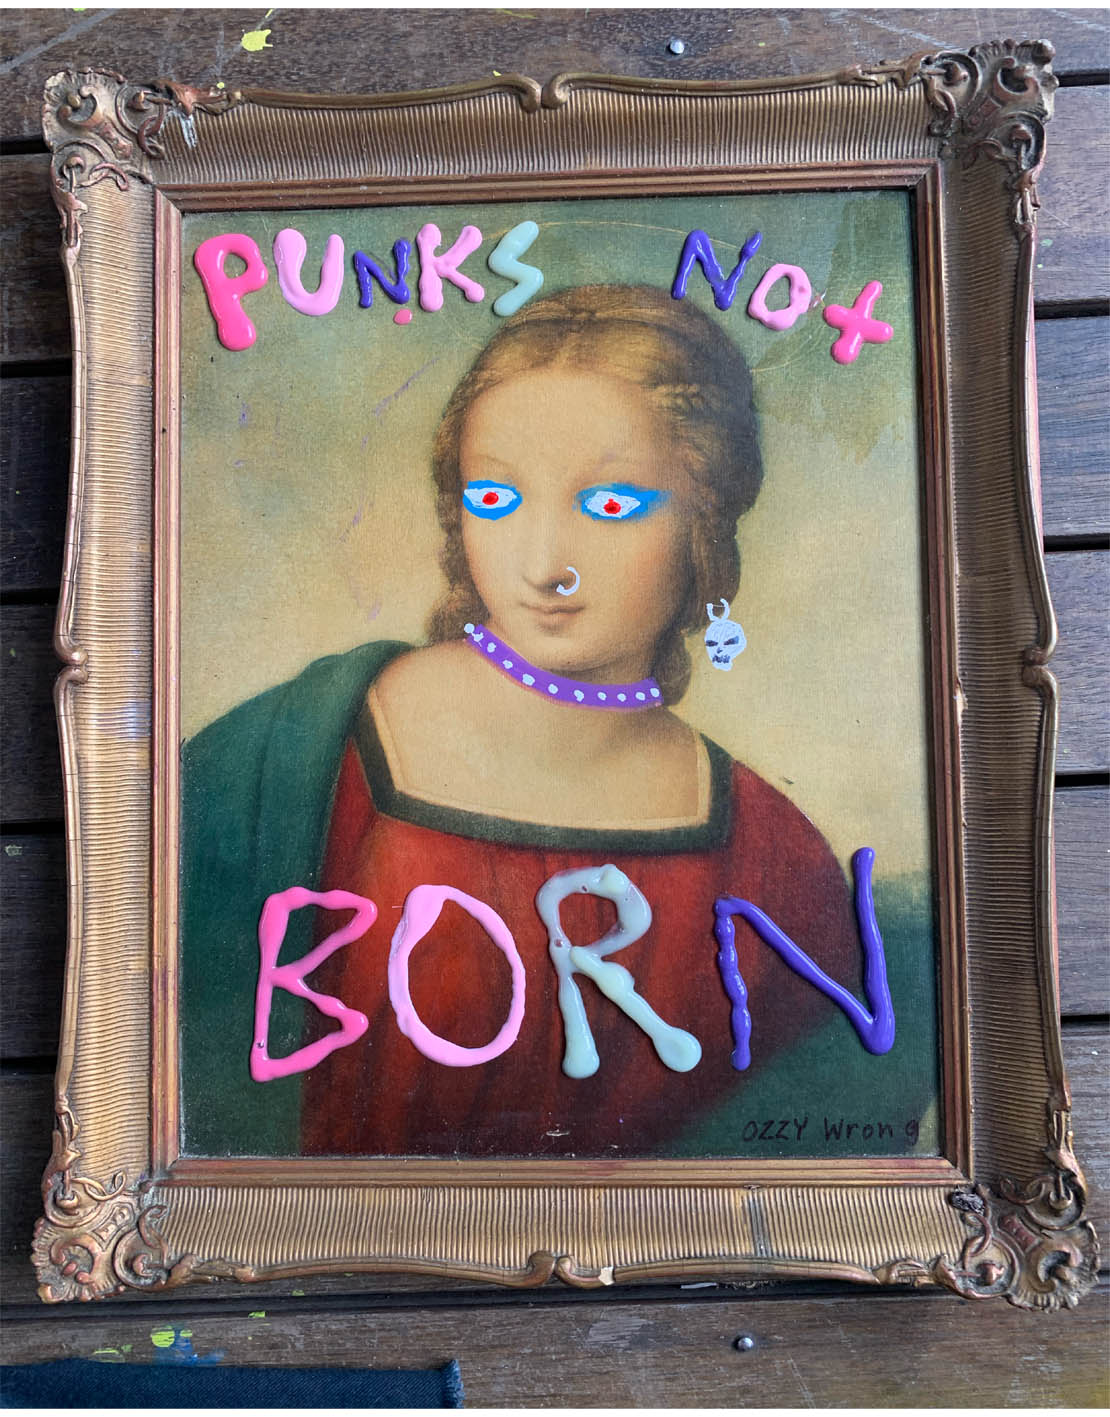 punks not born